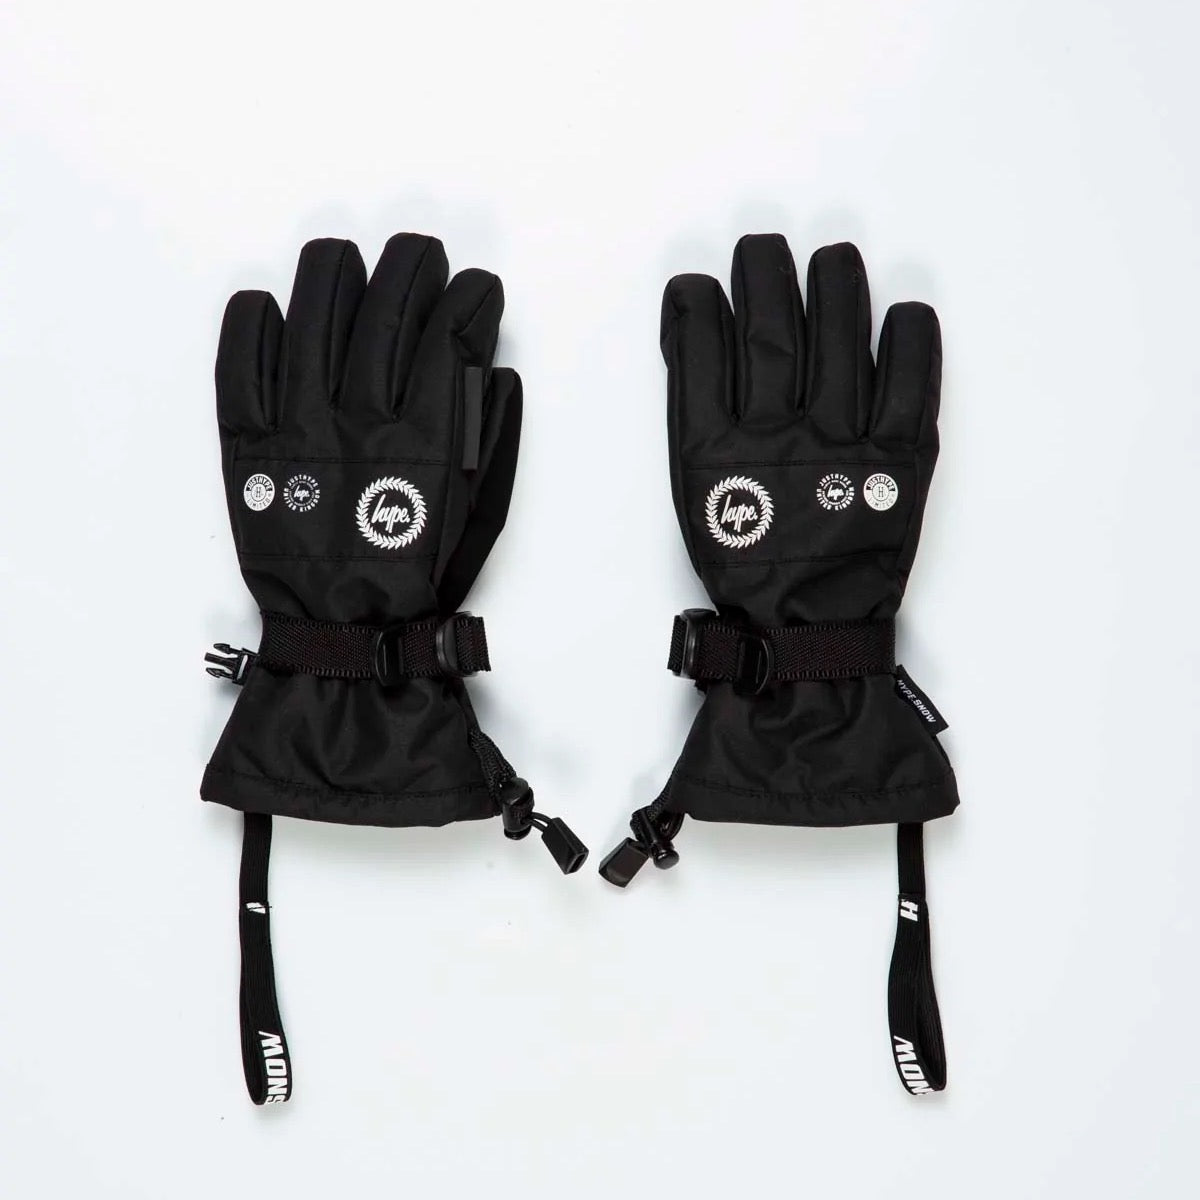 Hype Snow Gloves Zwf964 Clothing 4/6YRS / Black,7/9YRS / Black,10/12YRS / Black